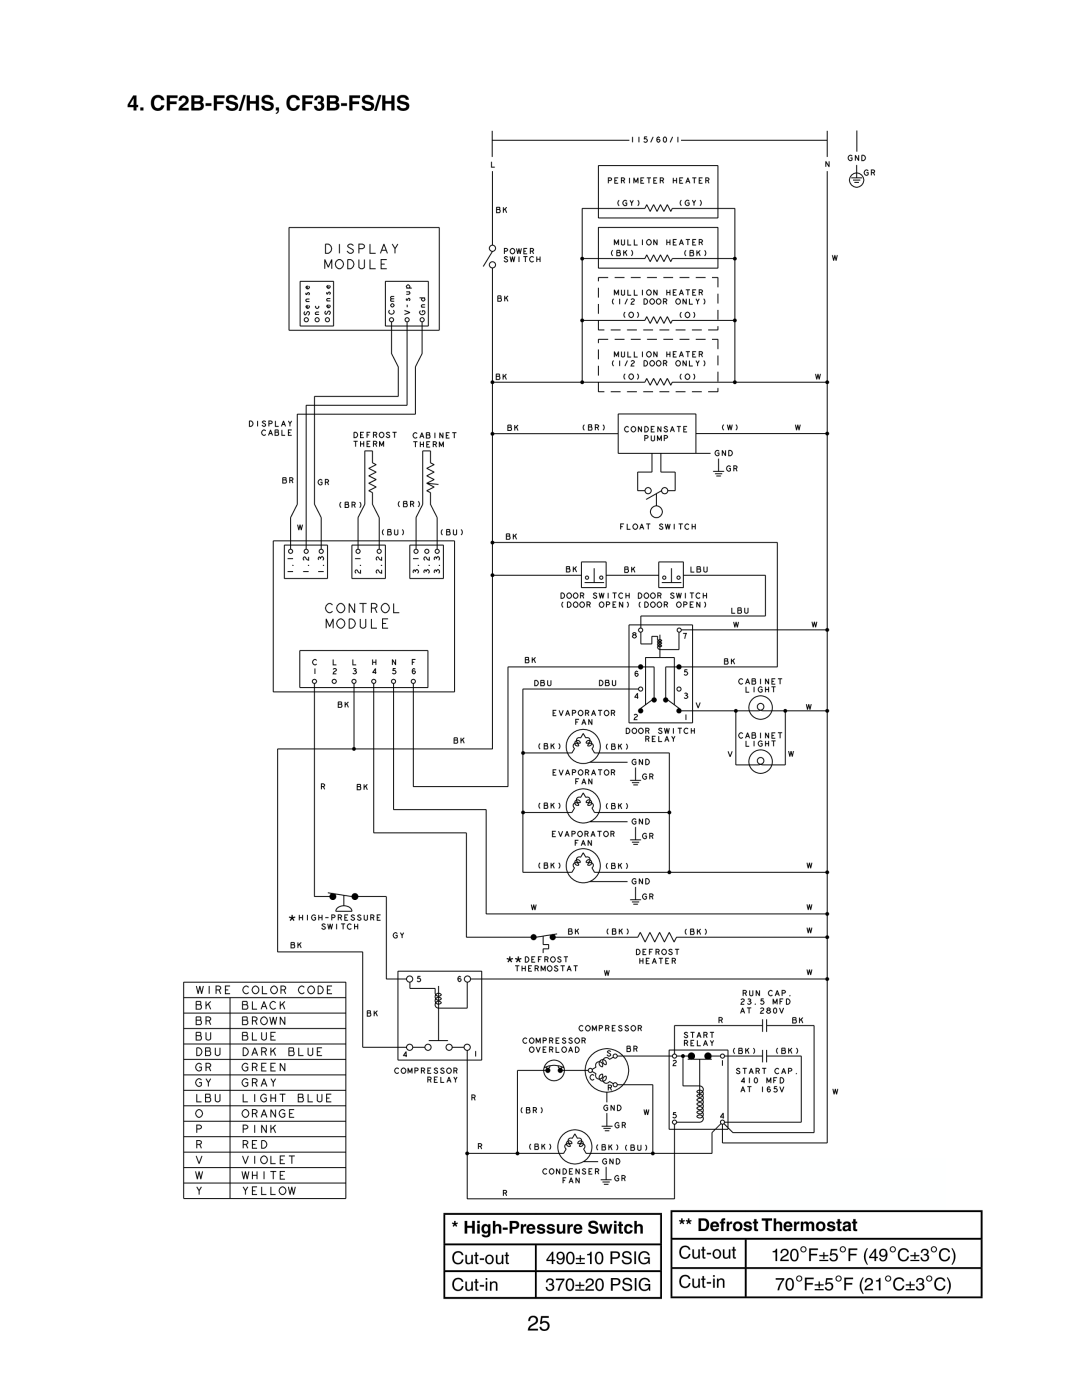 Hoshizaki 73183 service manual 4. CF2B-FS/HS, CF3B-FS/HS, High-Pressure Switch, Defrost Thermostat 